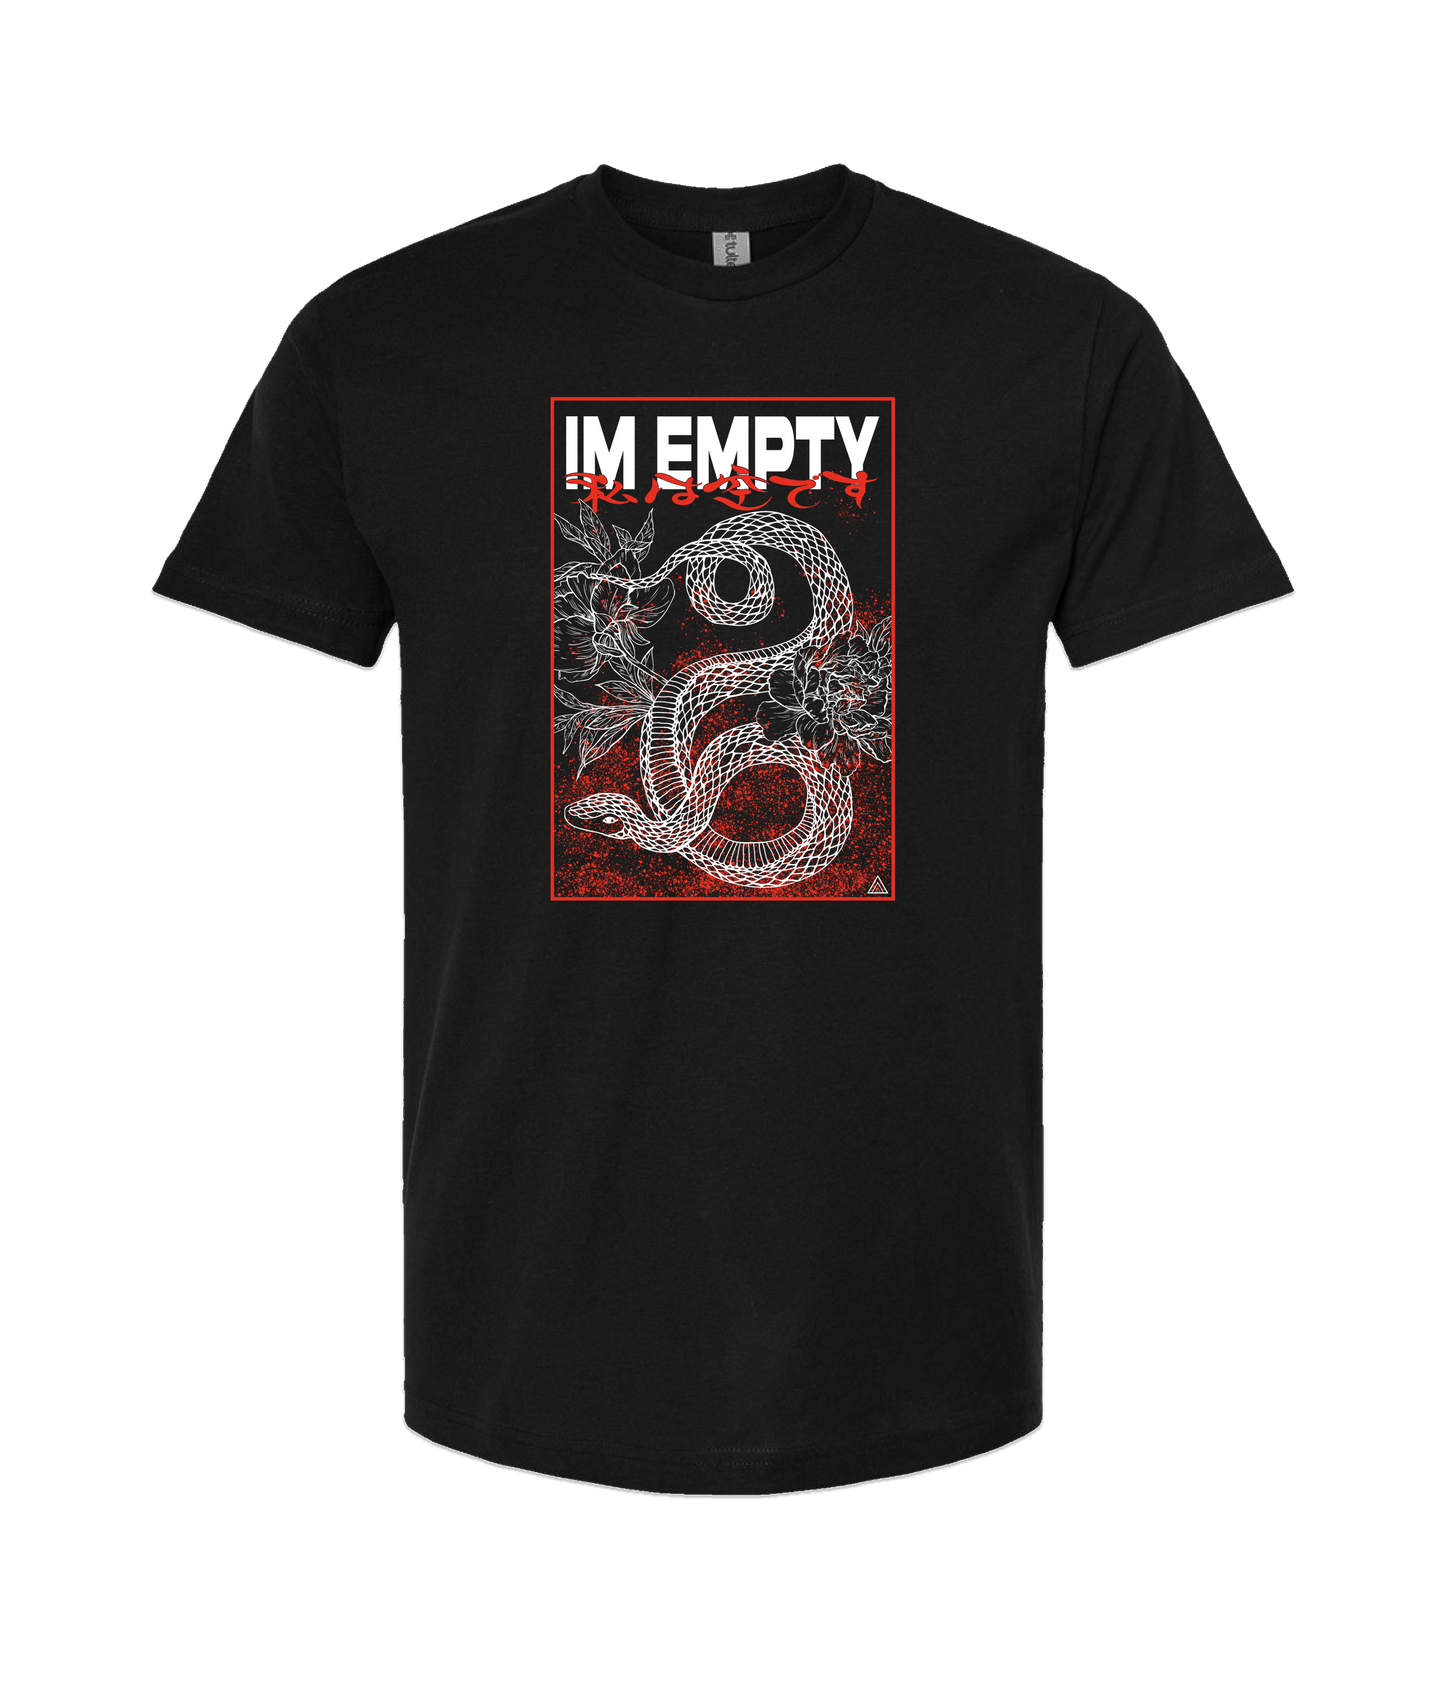 Glass Lotus - IM EMPTY - Black T-Shirt